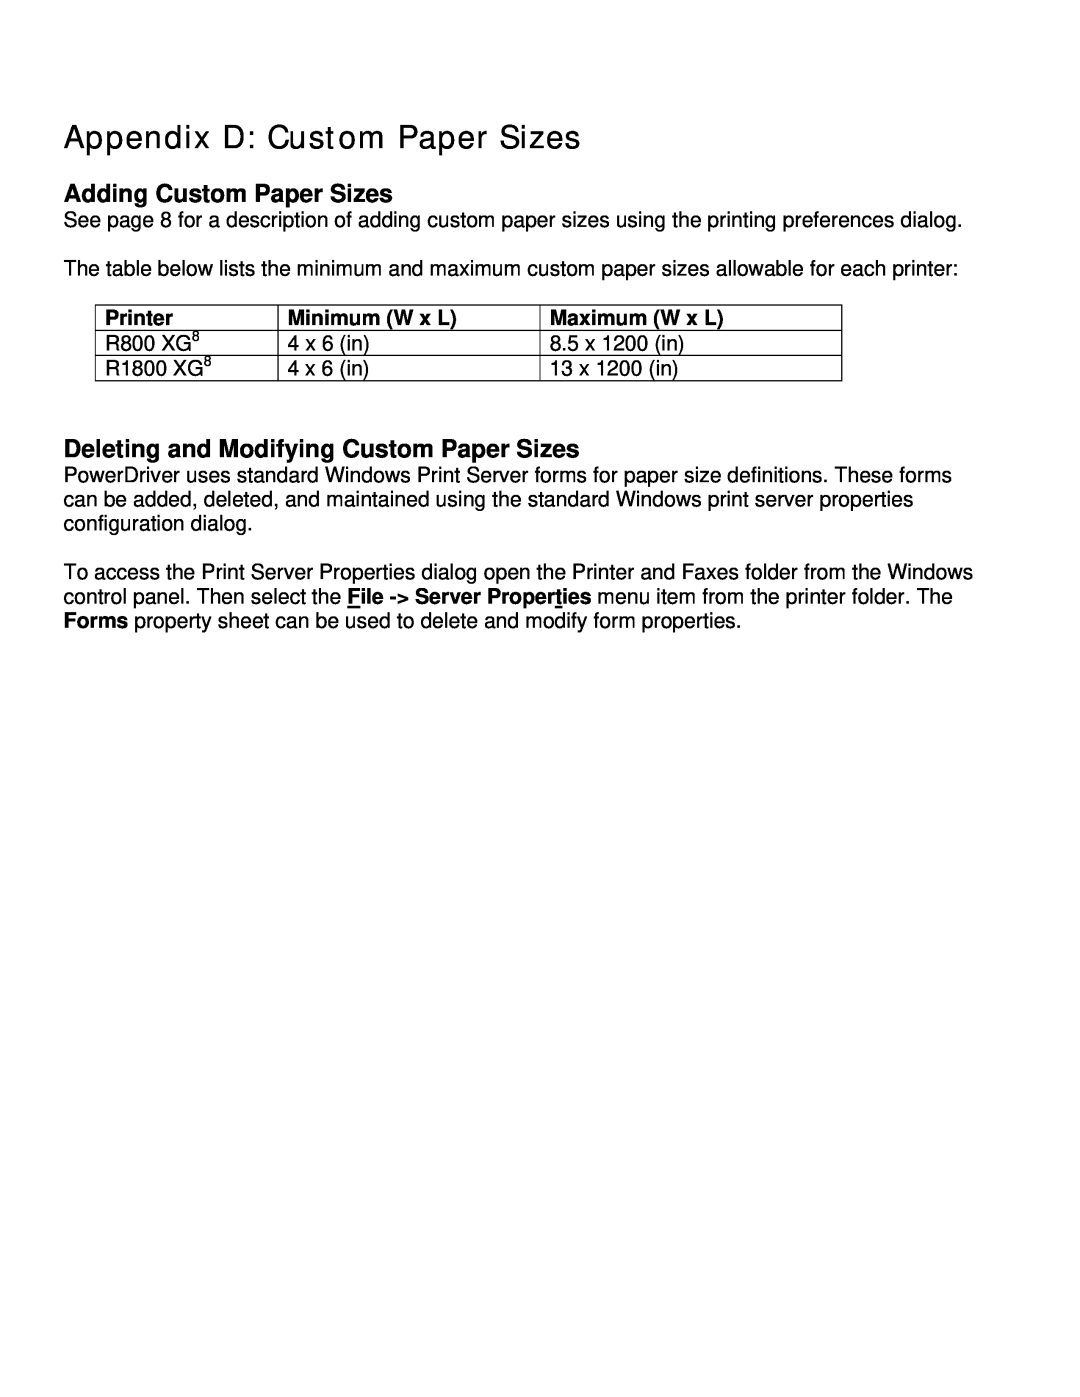 Epson R800 Appendix D Custom Paper Sizes, Adding Custom Paper Sizes, Deleting and Modifying Custom Paper Sizes, Printer 